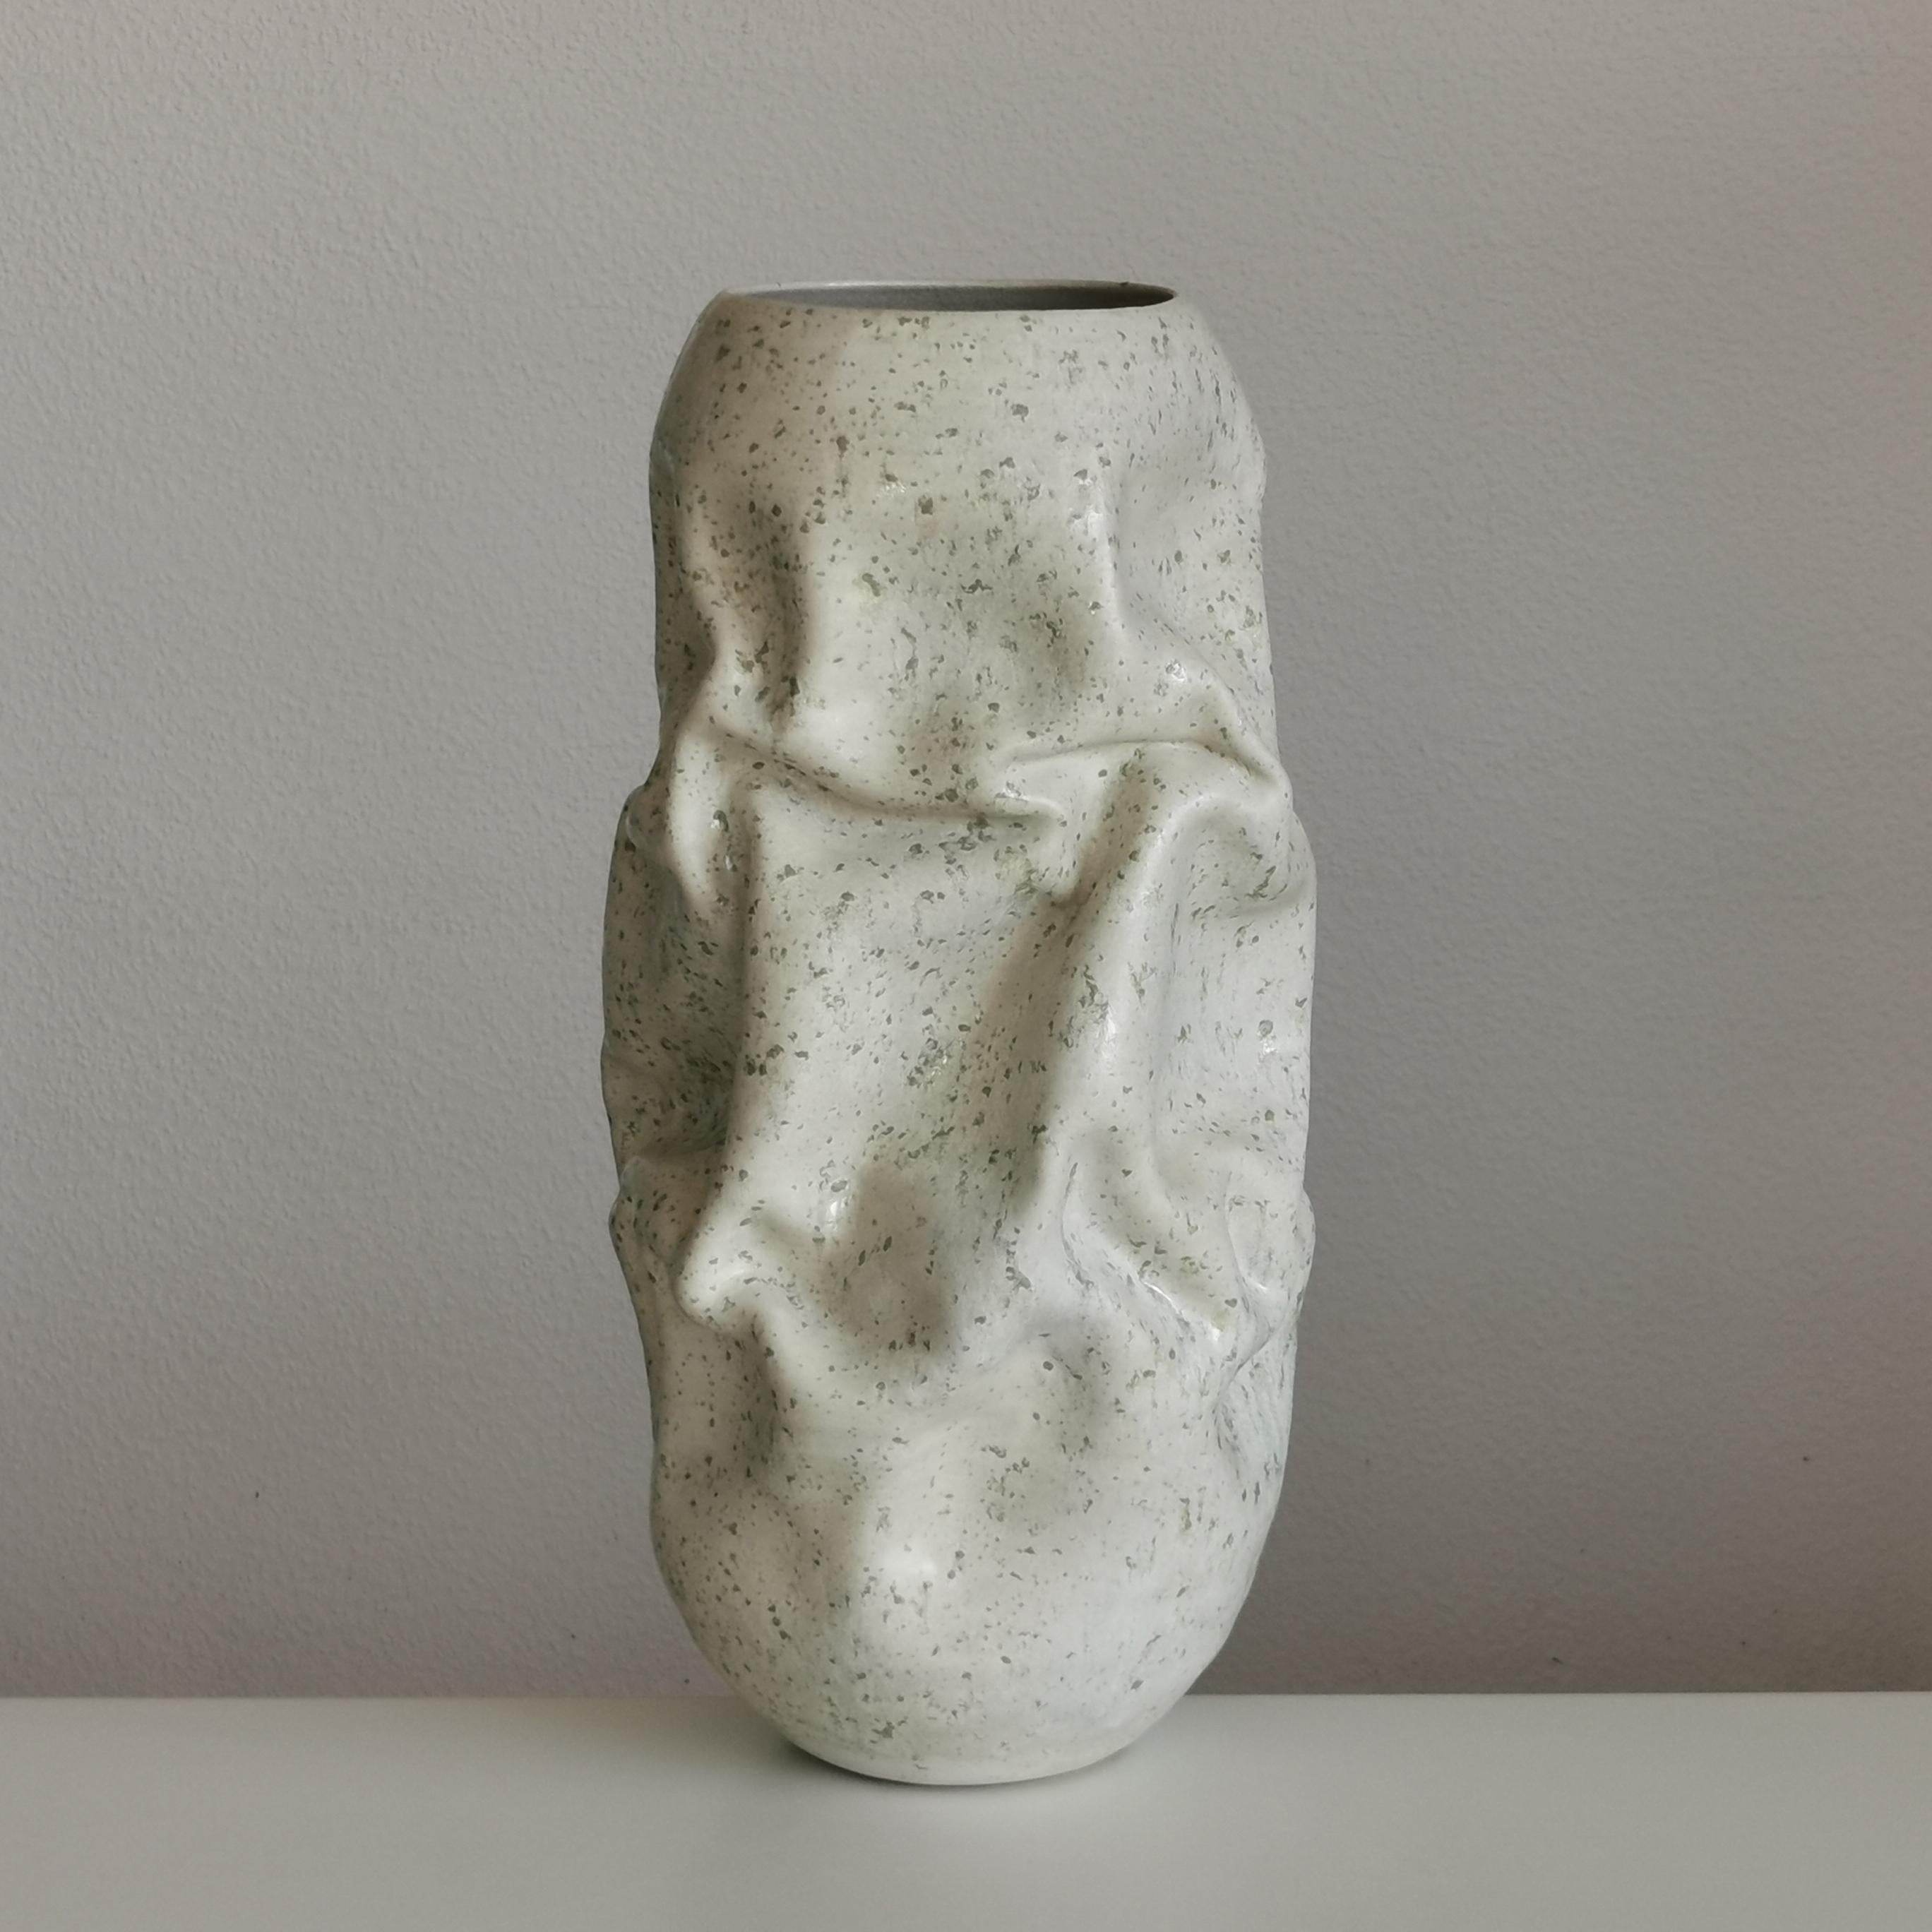 Medium White Crumpled Form, Green Chrystals, Vessel No.128, Ceramic Sculpture For Sale 4